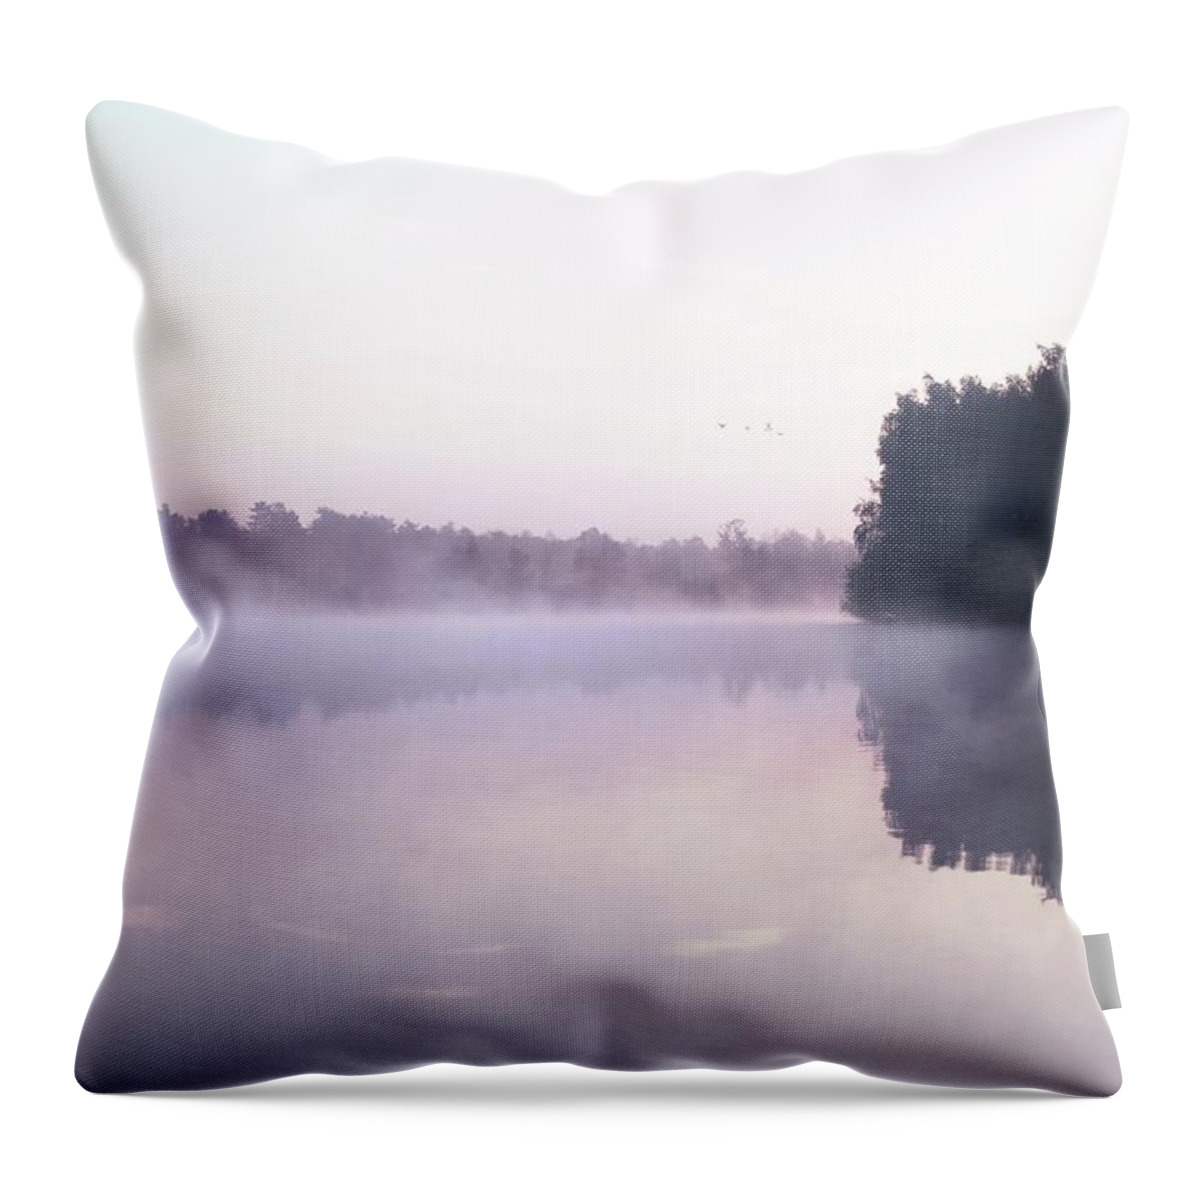 Landscape Throw Pillow featuring the photograph The face of Maasduinen 2 by Jaroslav Buna